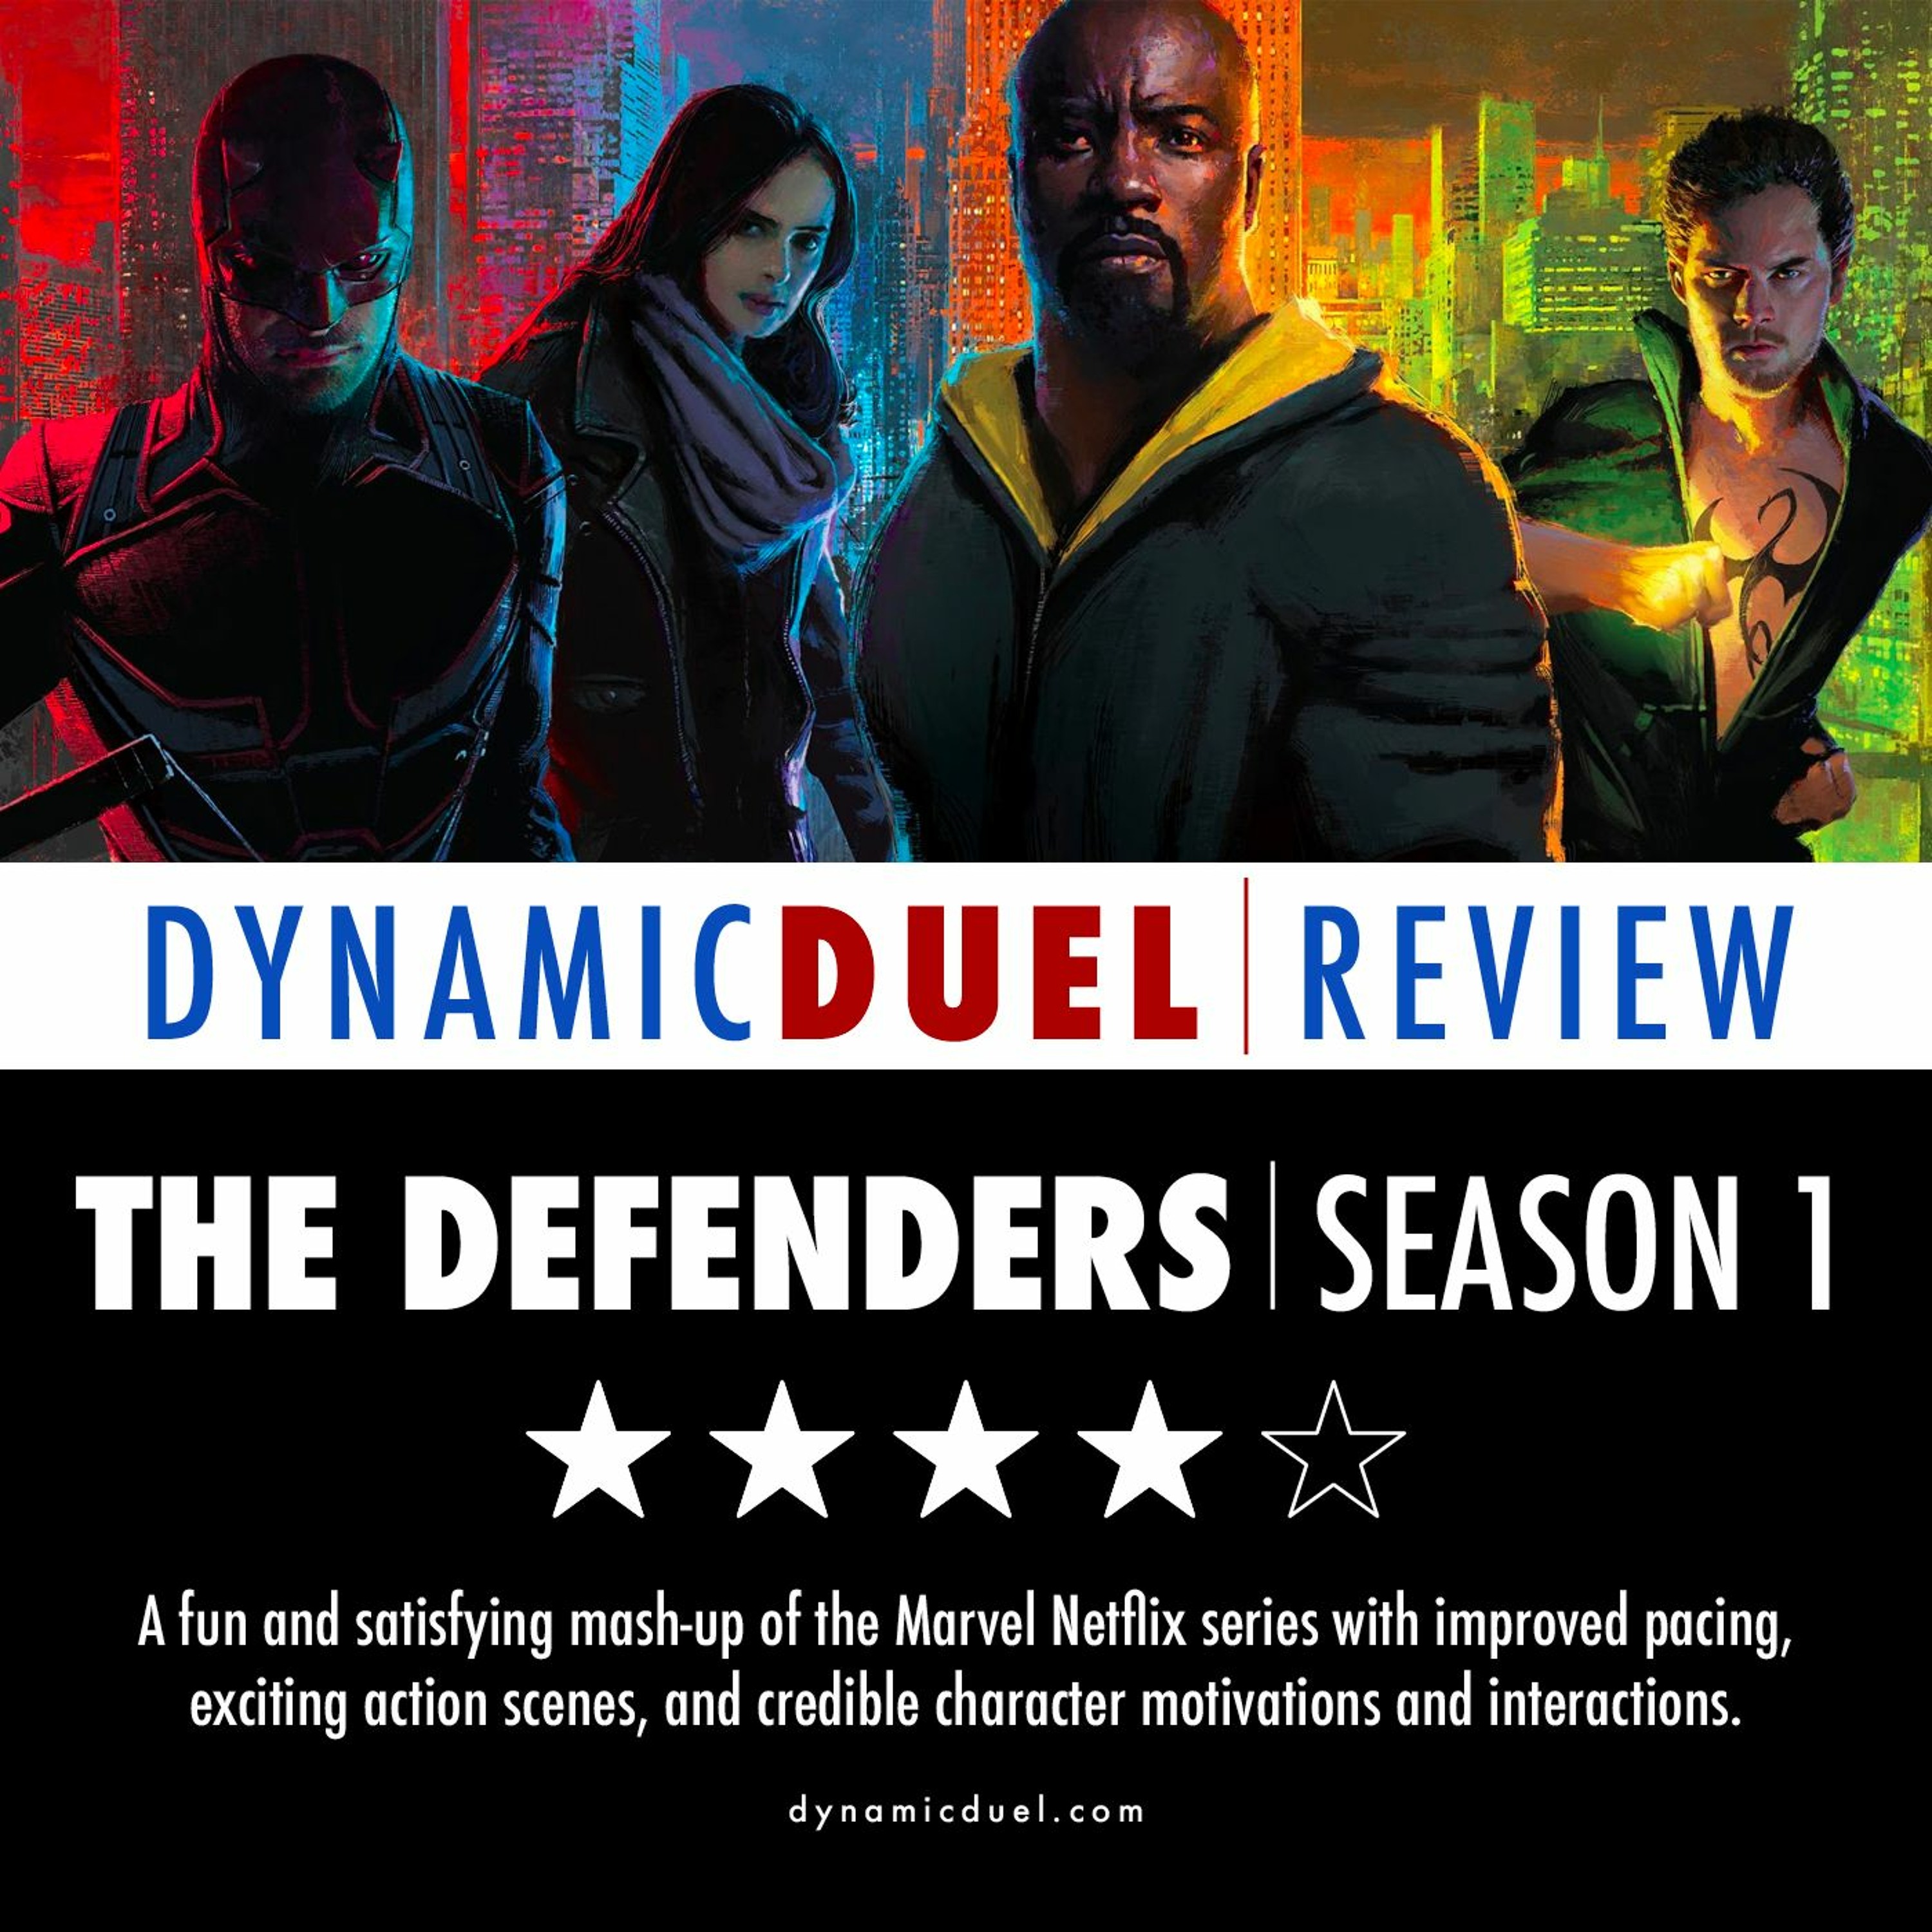 The Defenders Season 1 Review Image